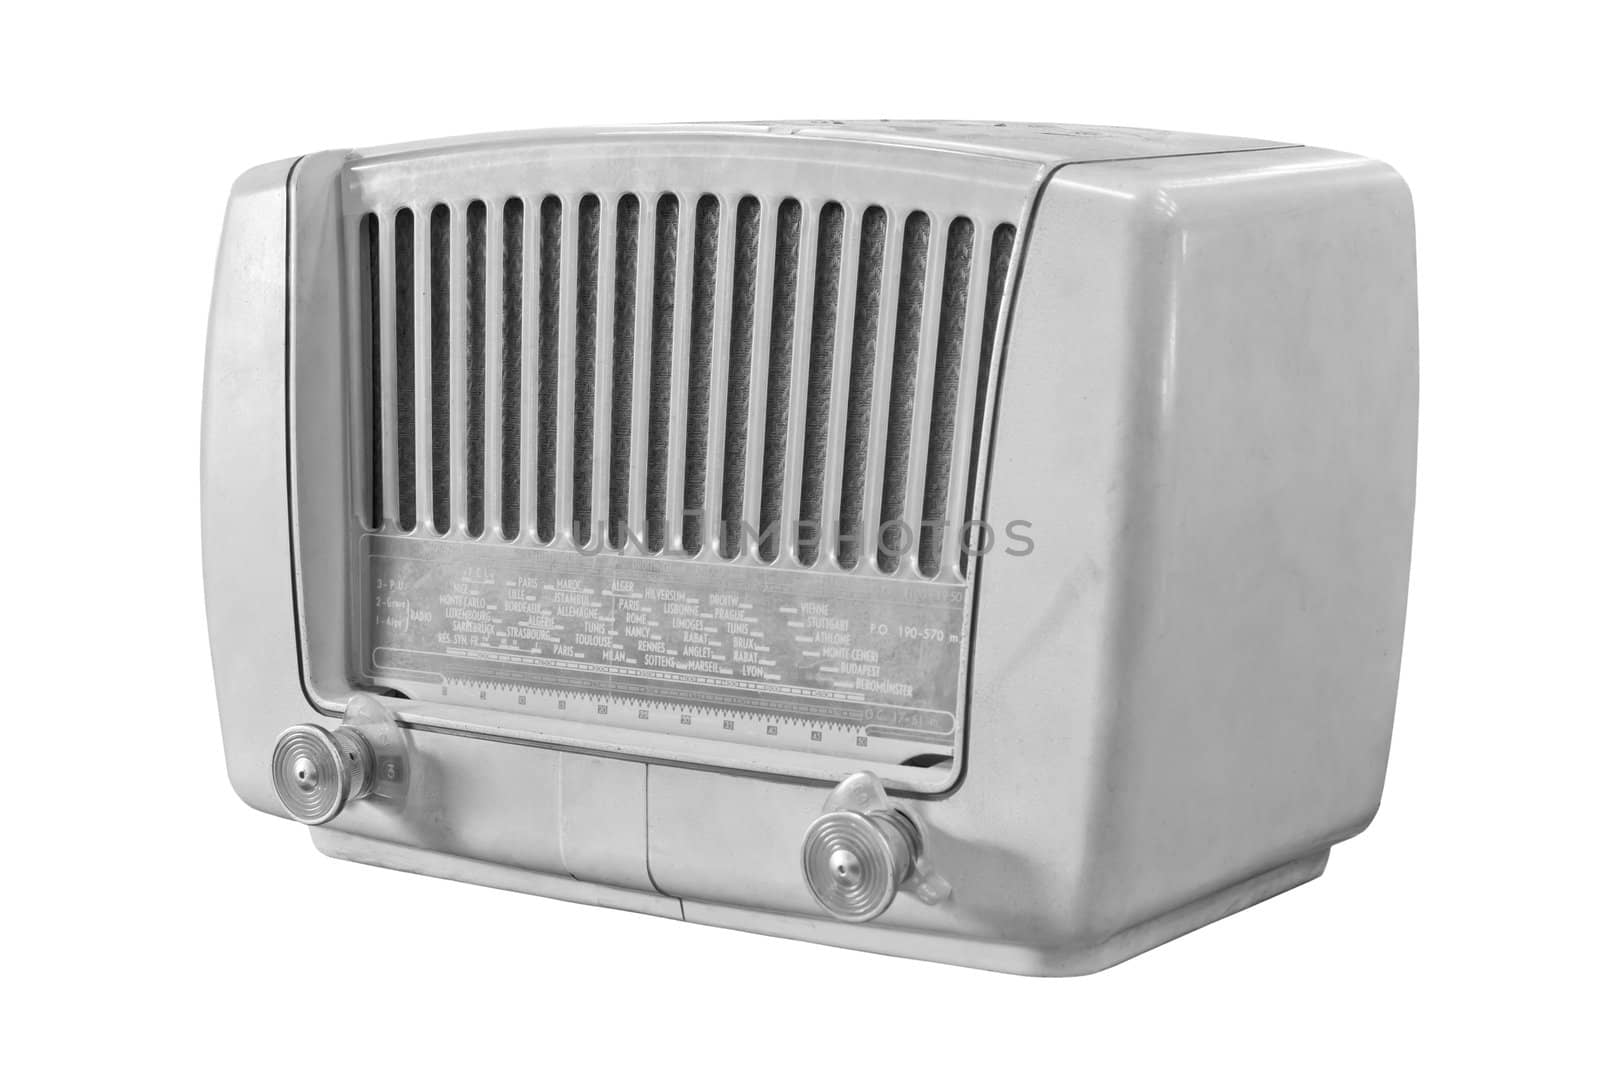 vintage radio isolated on white background by tungphoto